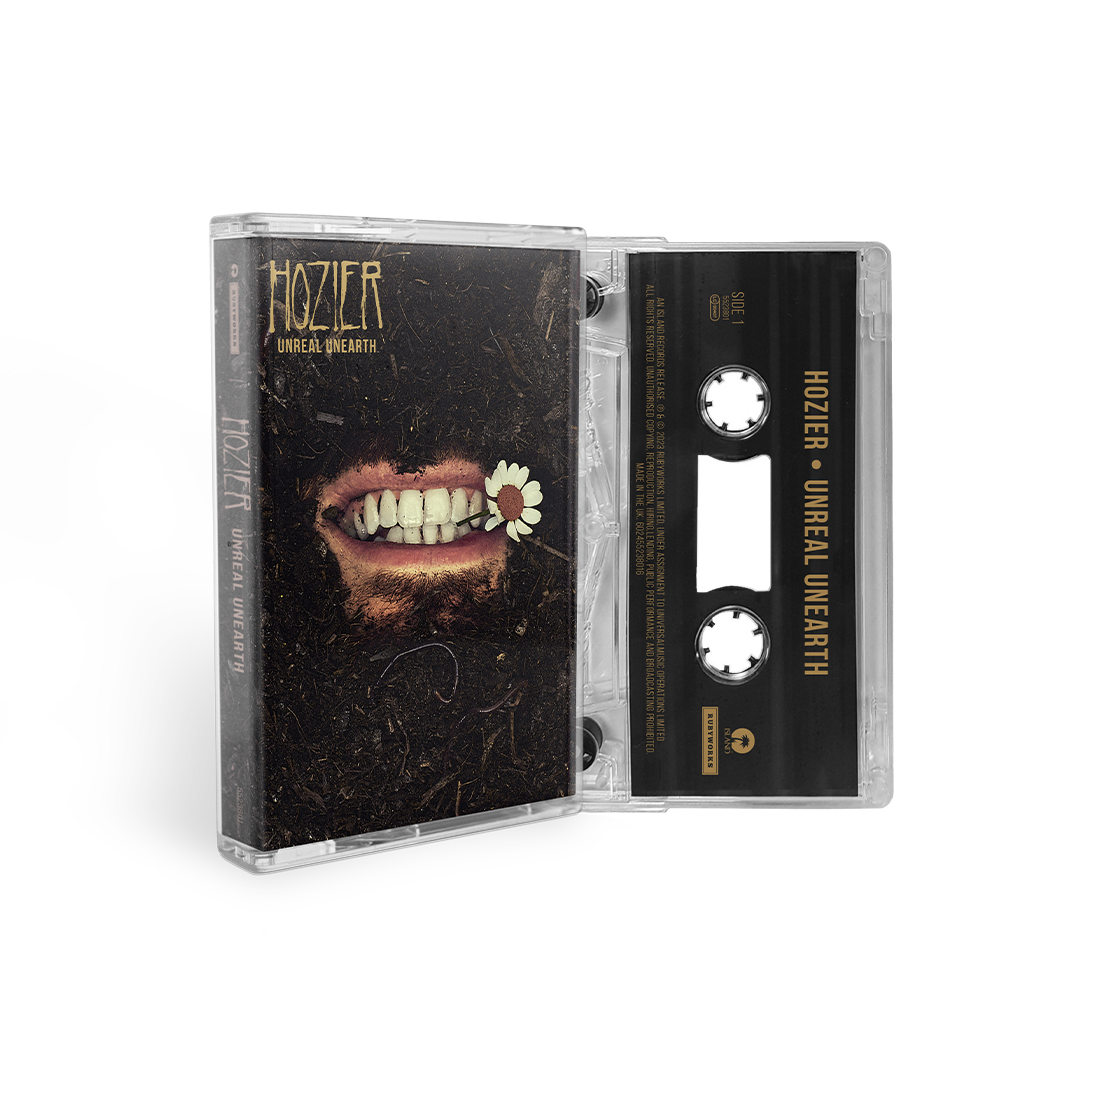 Unreal Unearth: CD, Cassette & Hoodie Bundle